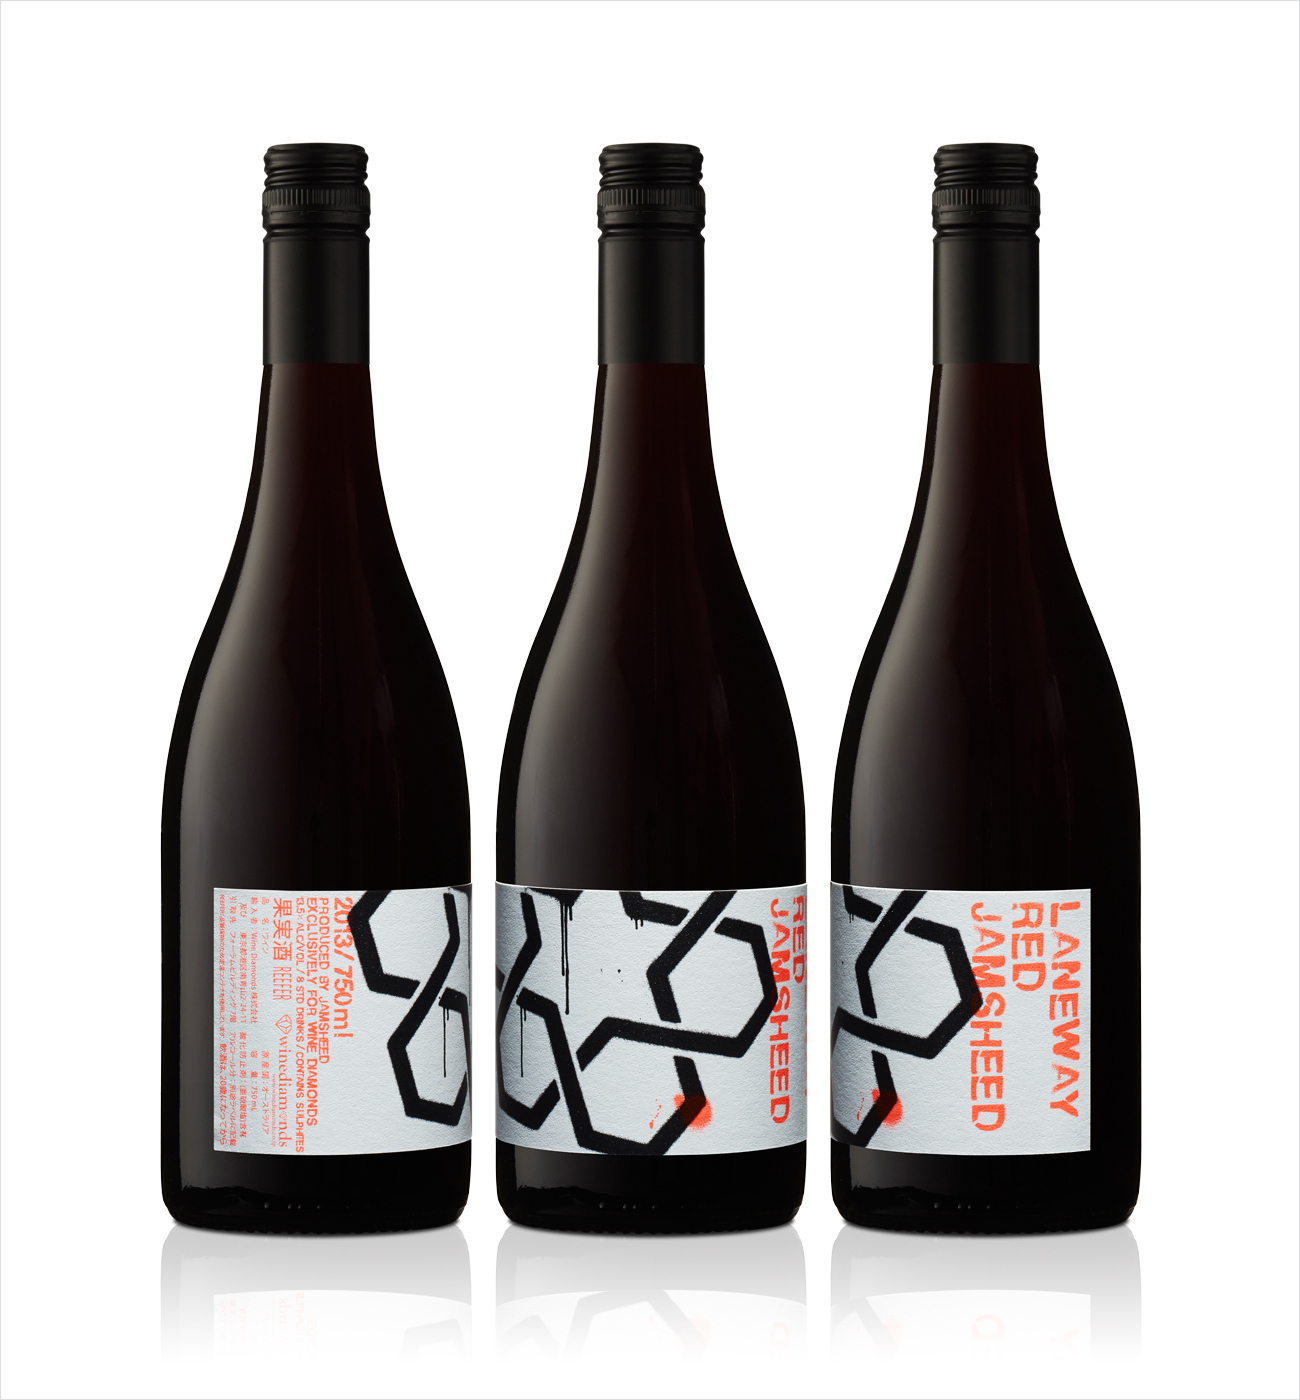 Wine Label Design – Jamsheed Laneway by Cloudy Co., Australia